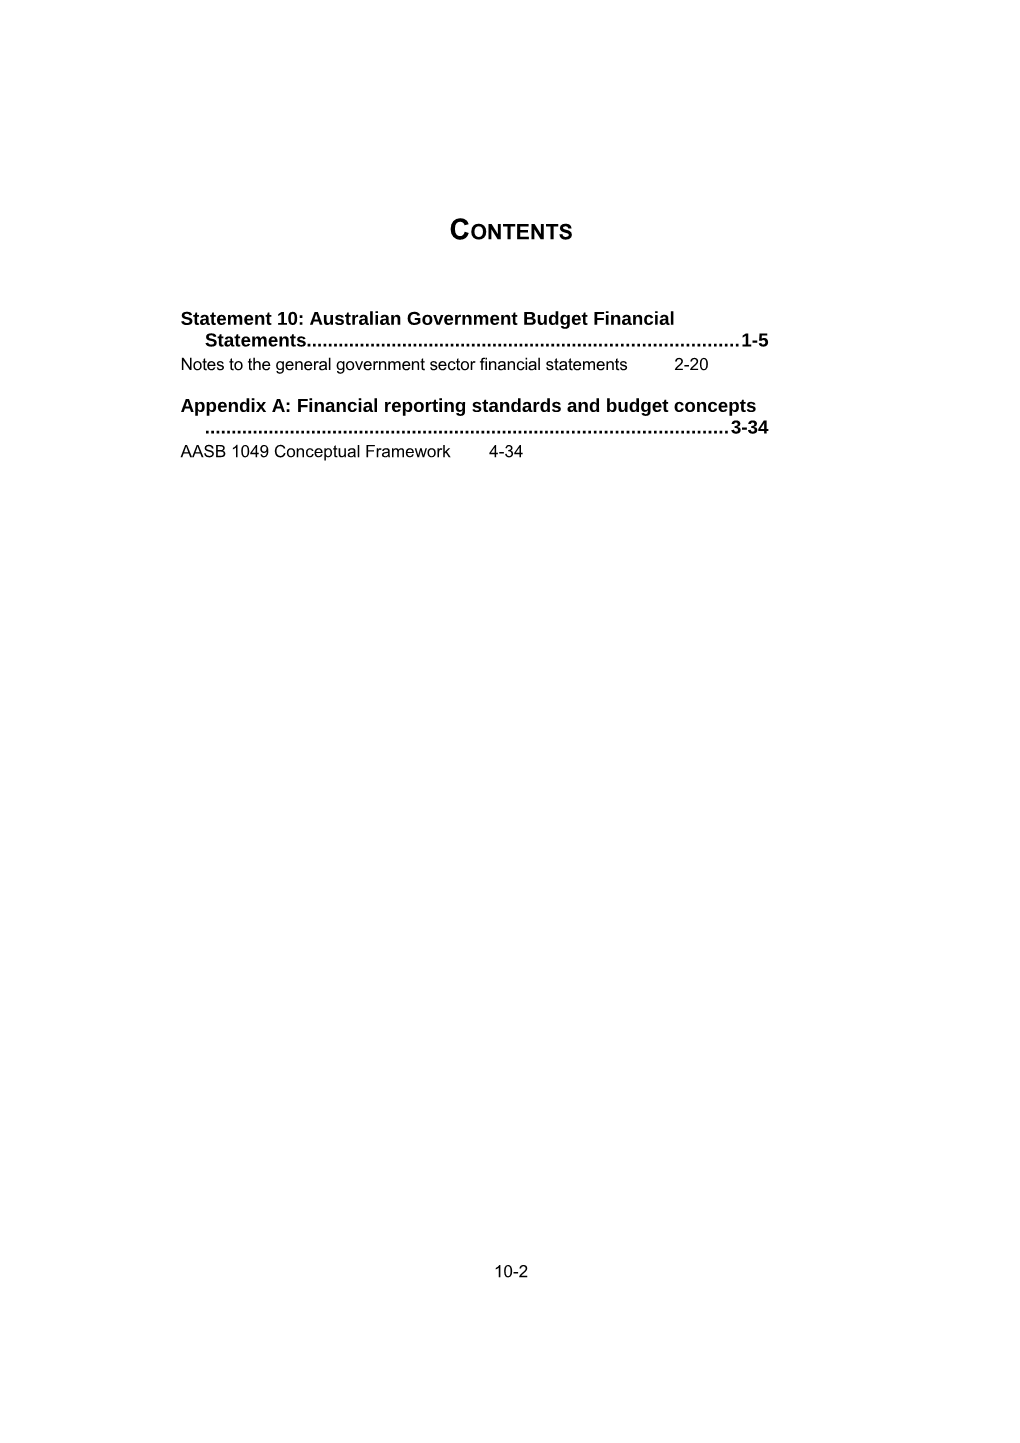 Statement 10: Australian Government Budget Financial Statements